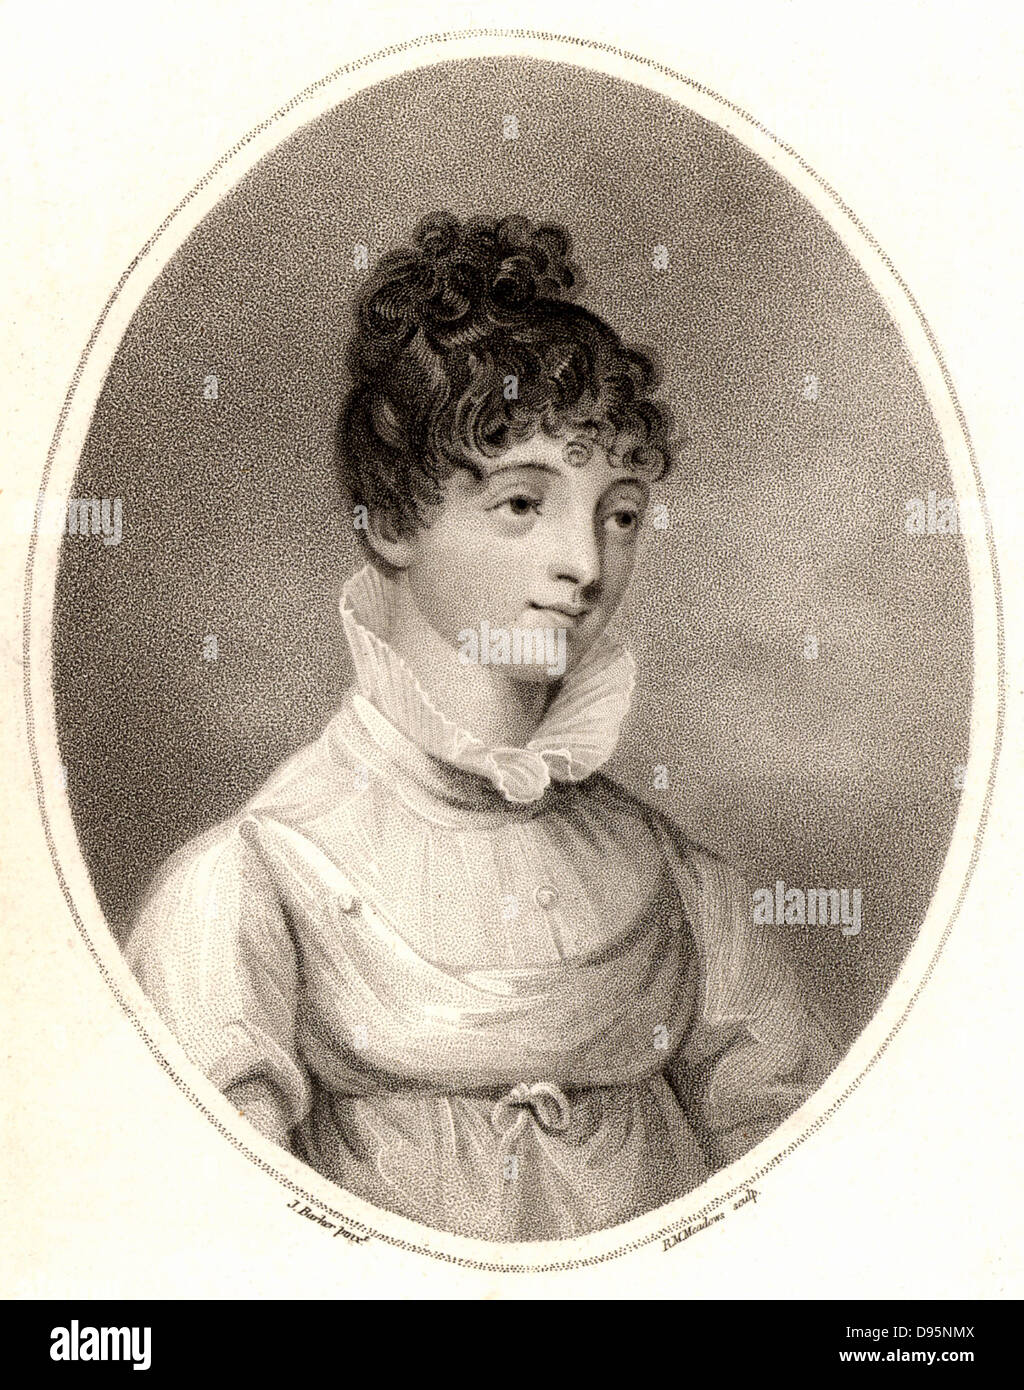 Elizabeth Smith (1776-1806) English oriental scholar born near Durham. Stipple engraving. Stock Photo